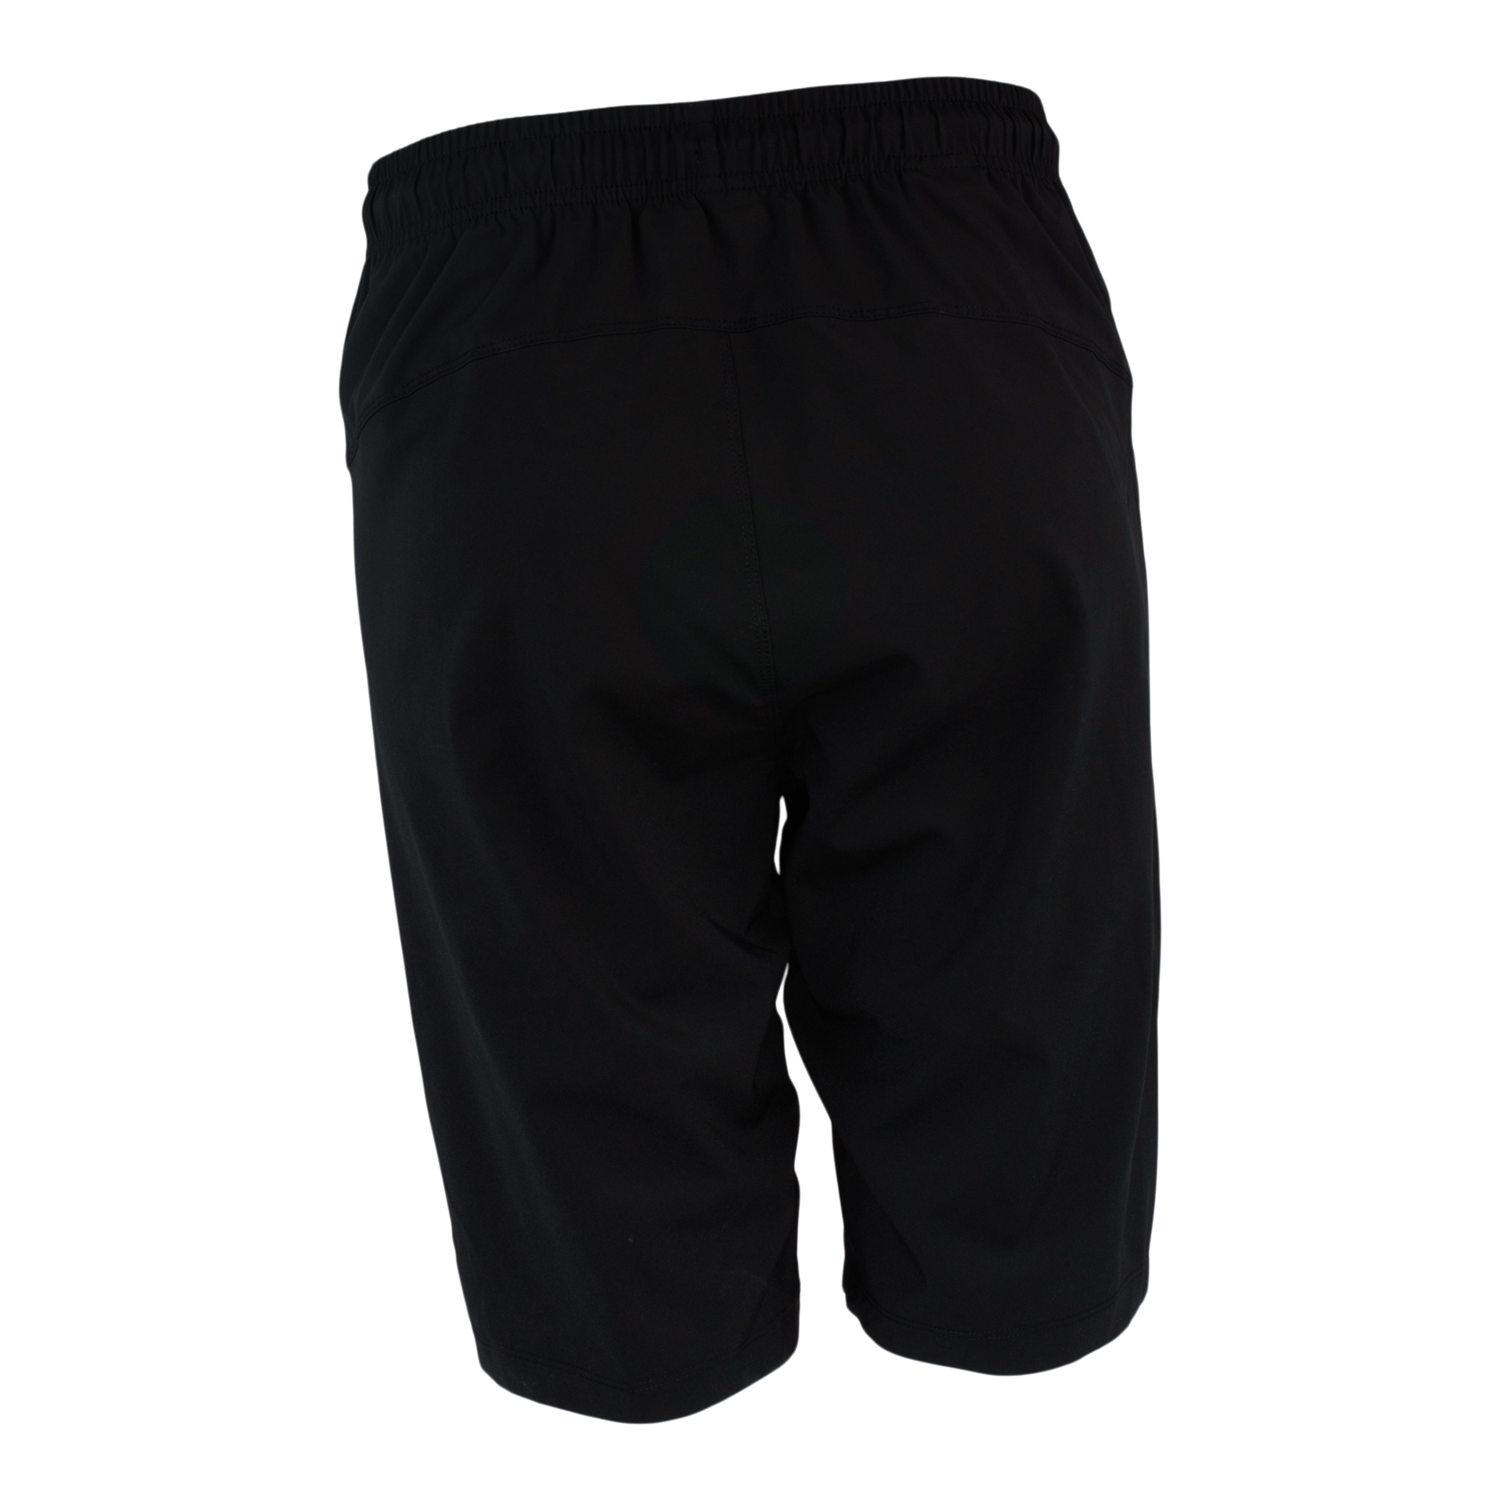 Sideline Flex Performance Woven Shorts